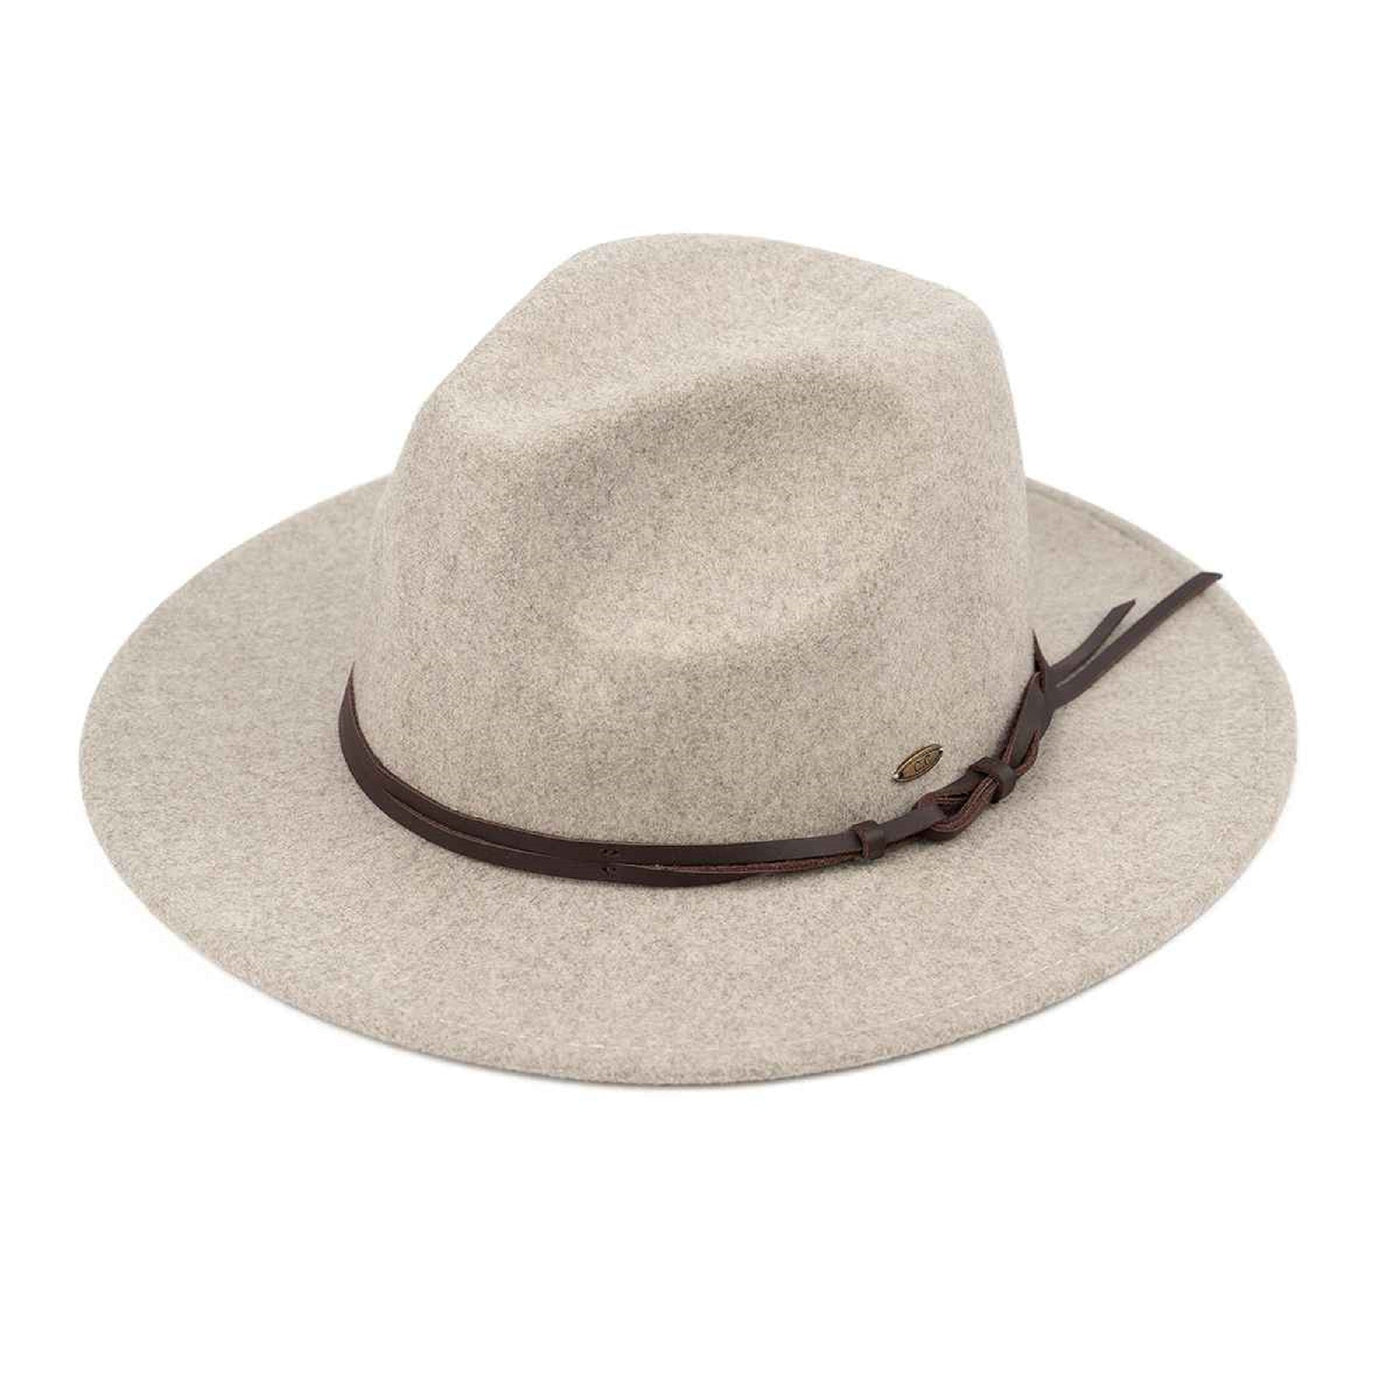 WF4 Savannah Felt Hat With Hitch Knot Cord